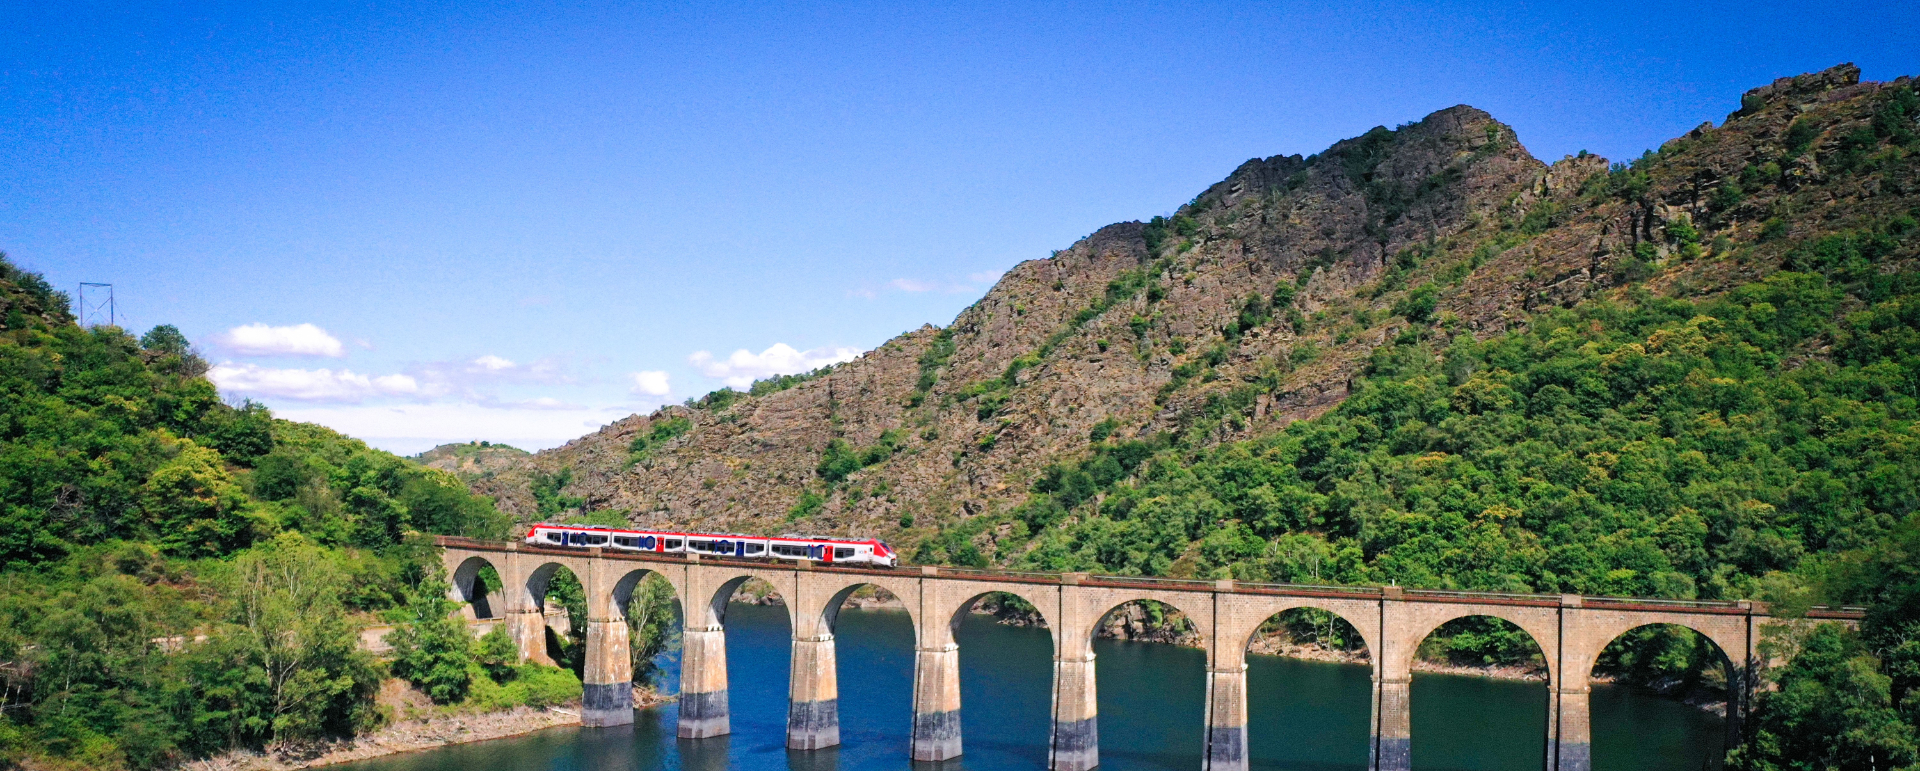 Occitanie Rail Tour train ©Patrice Thebault